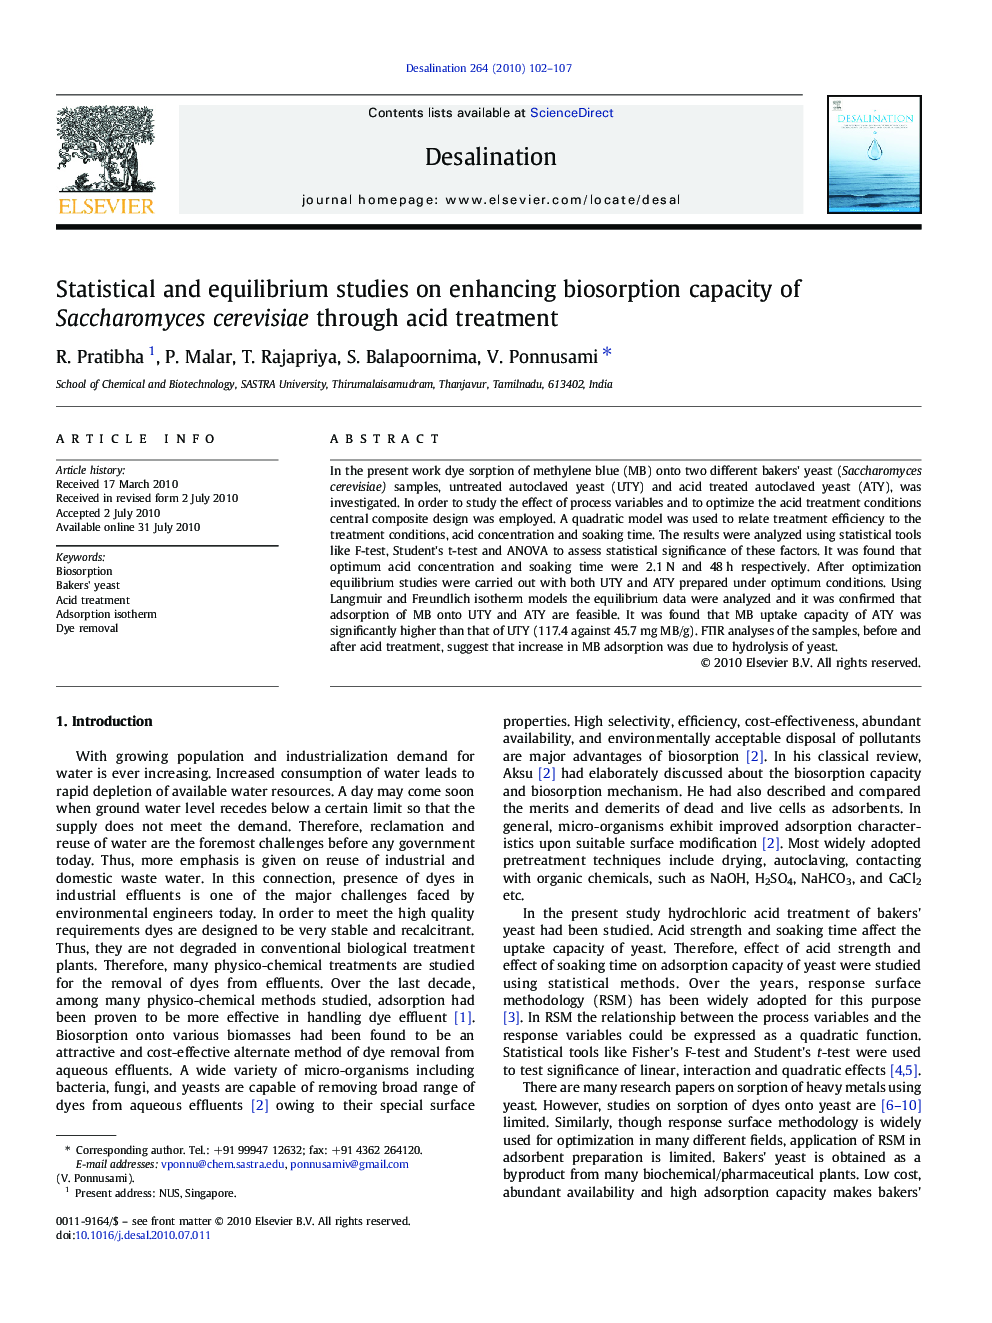 Statistical and equilibrium studies on enhancing biosorption capacity of Saccharomyces cerevisiae through acid treatment